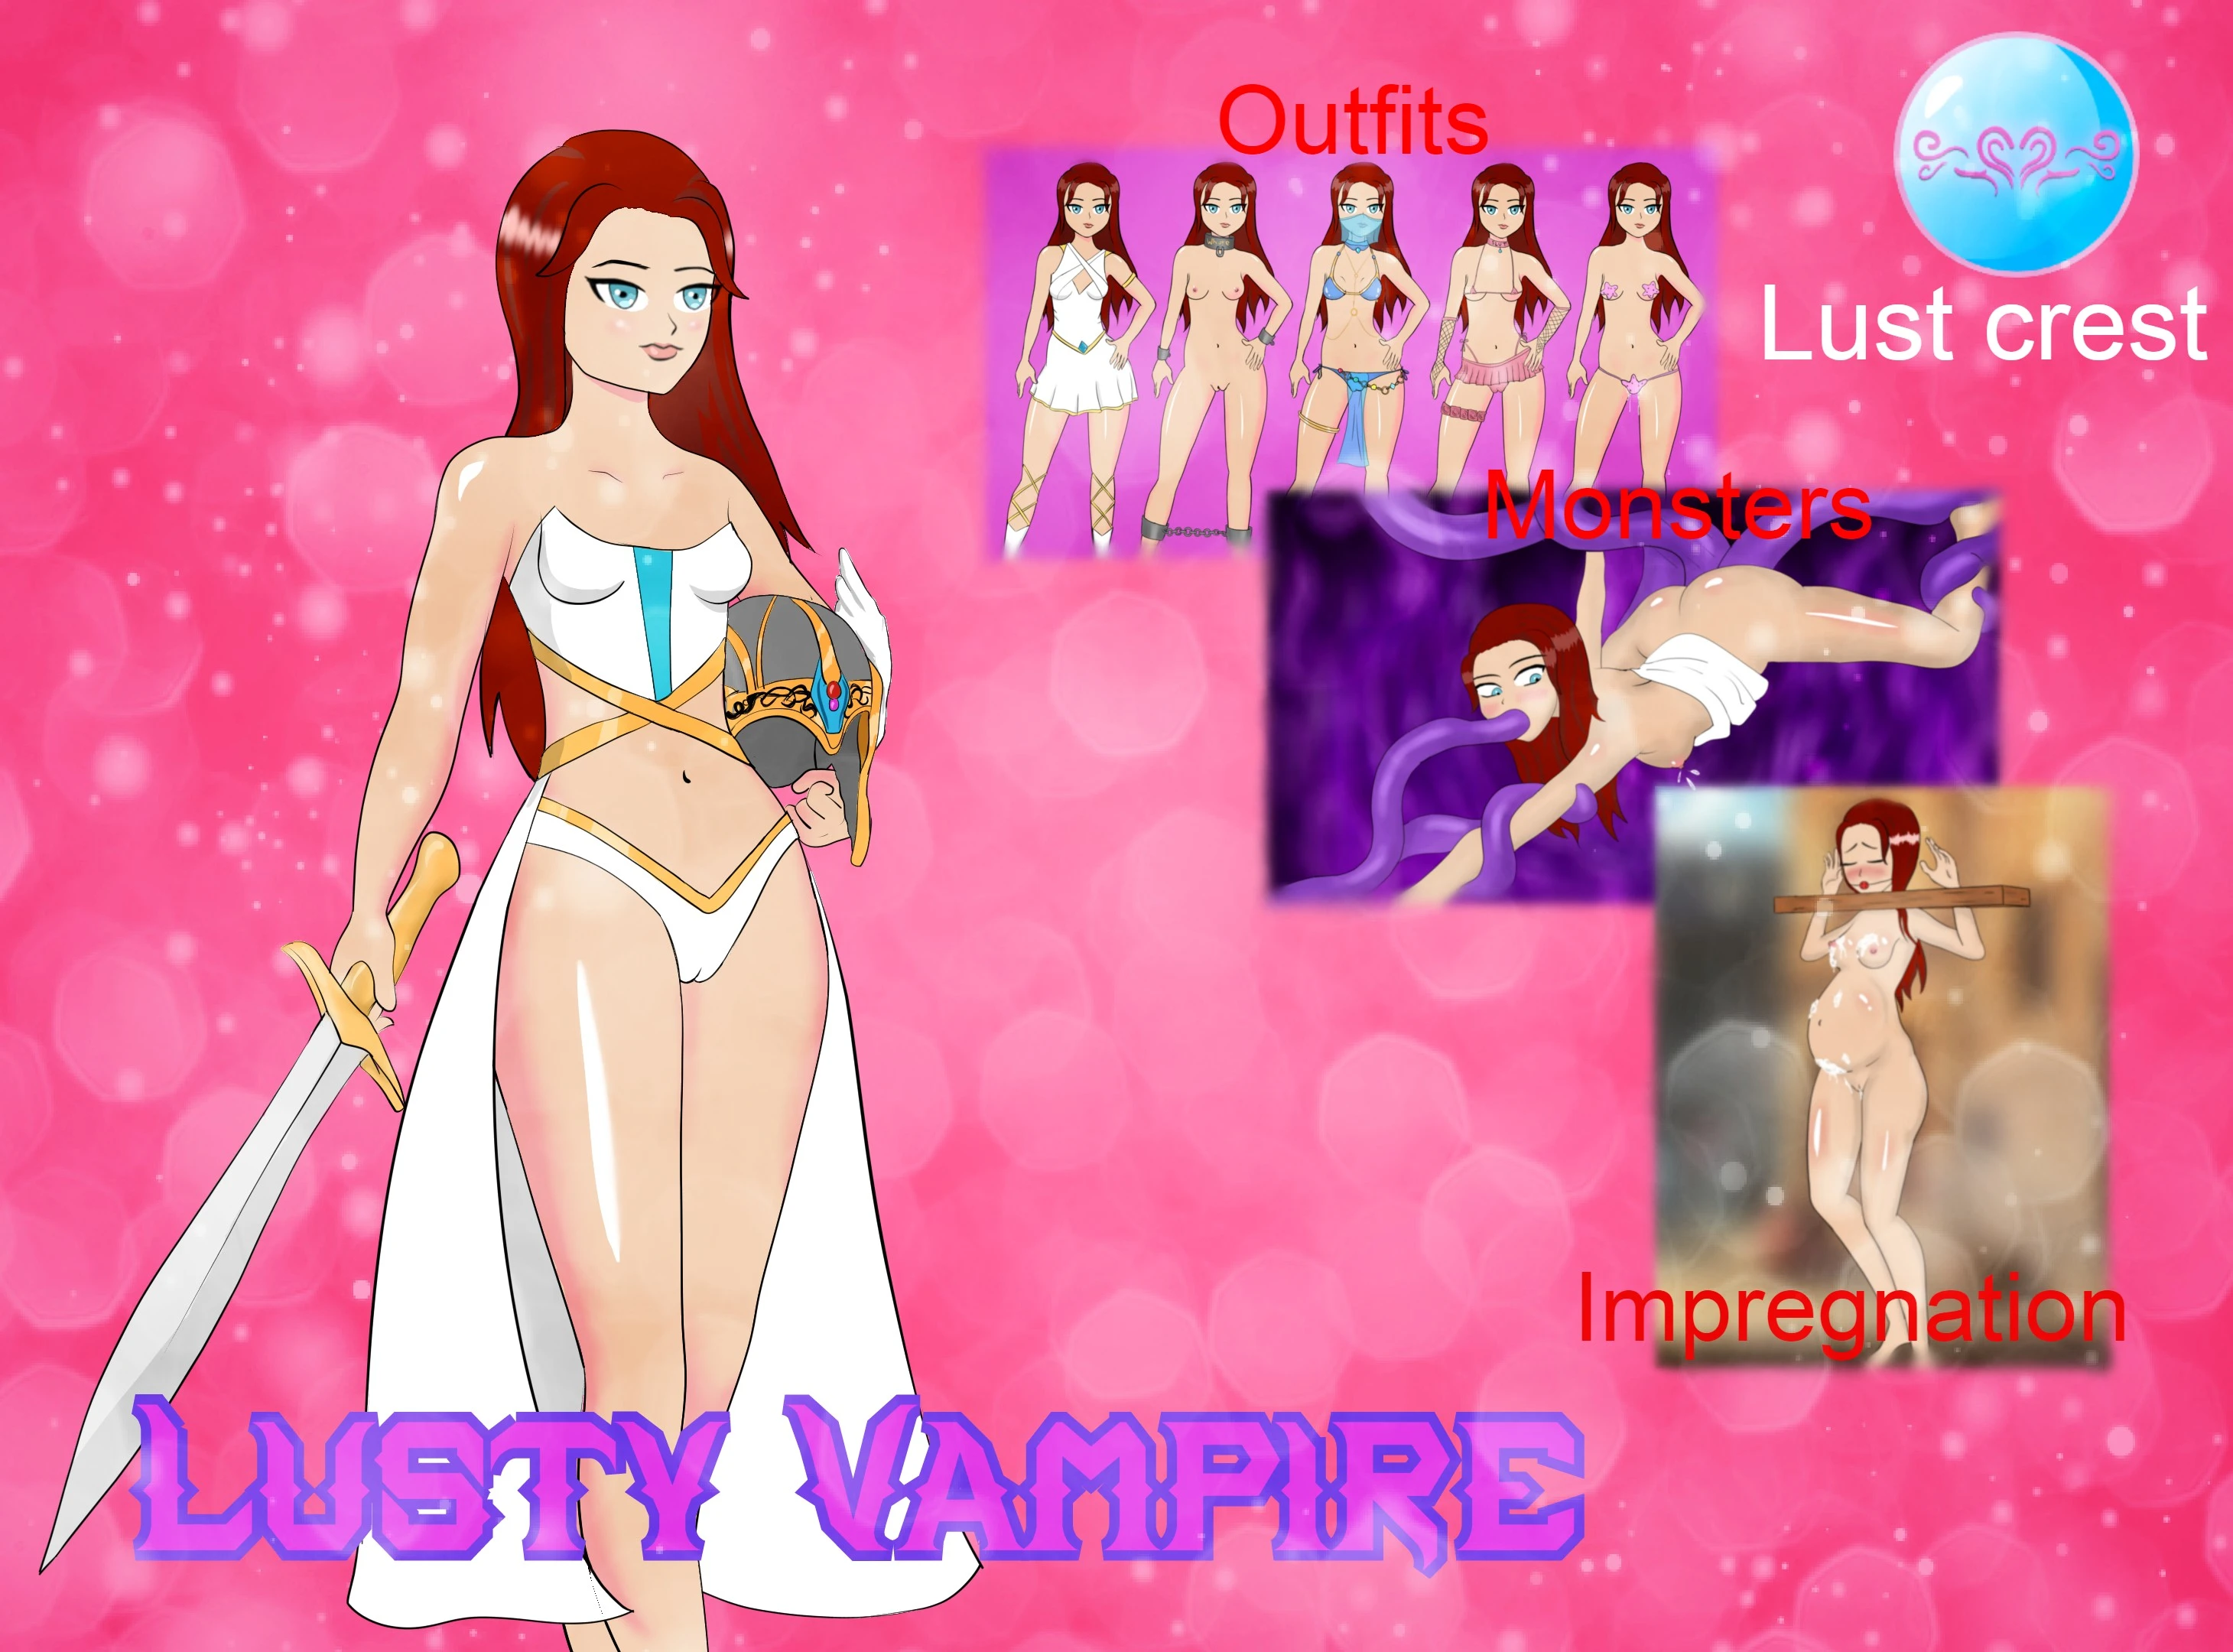 Lusty Vampire [v0.0.1] main image